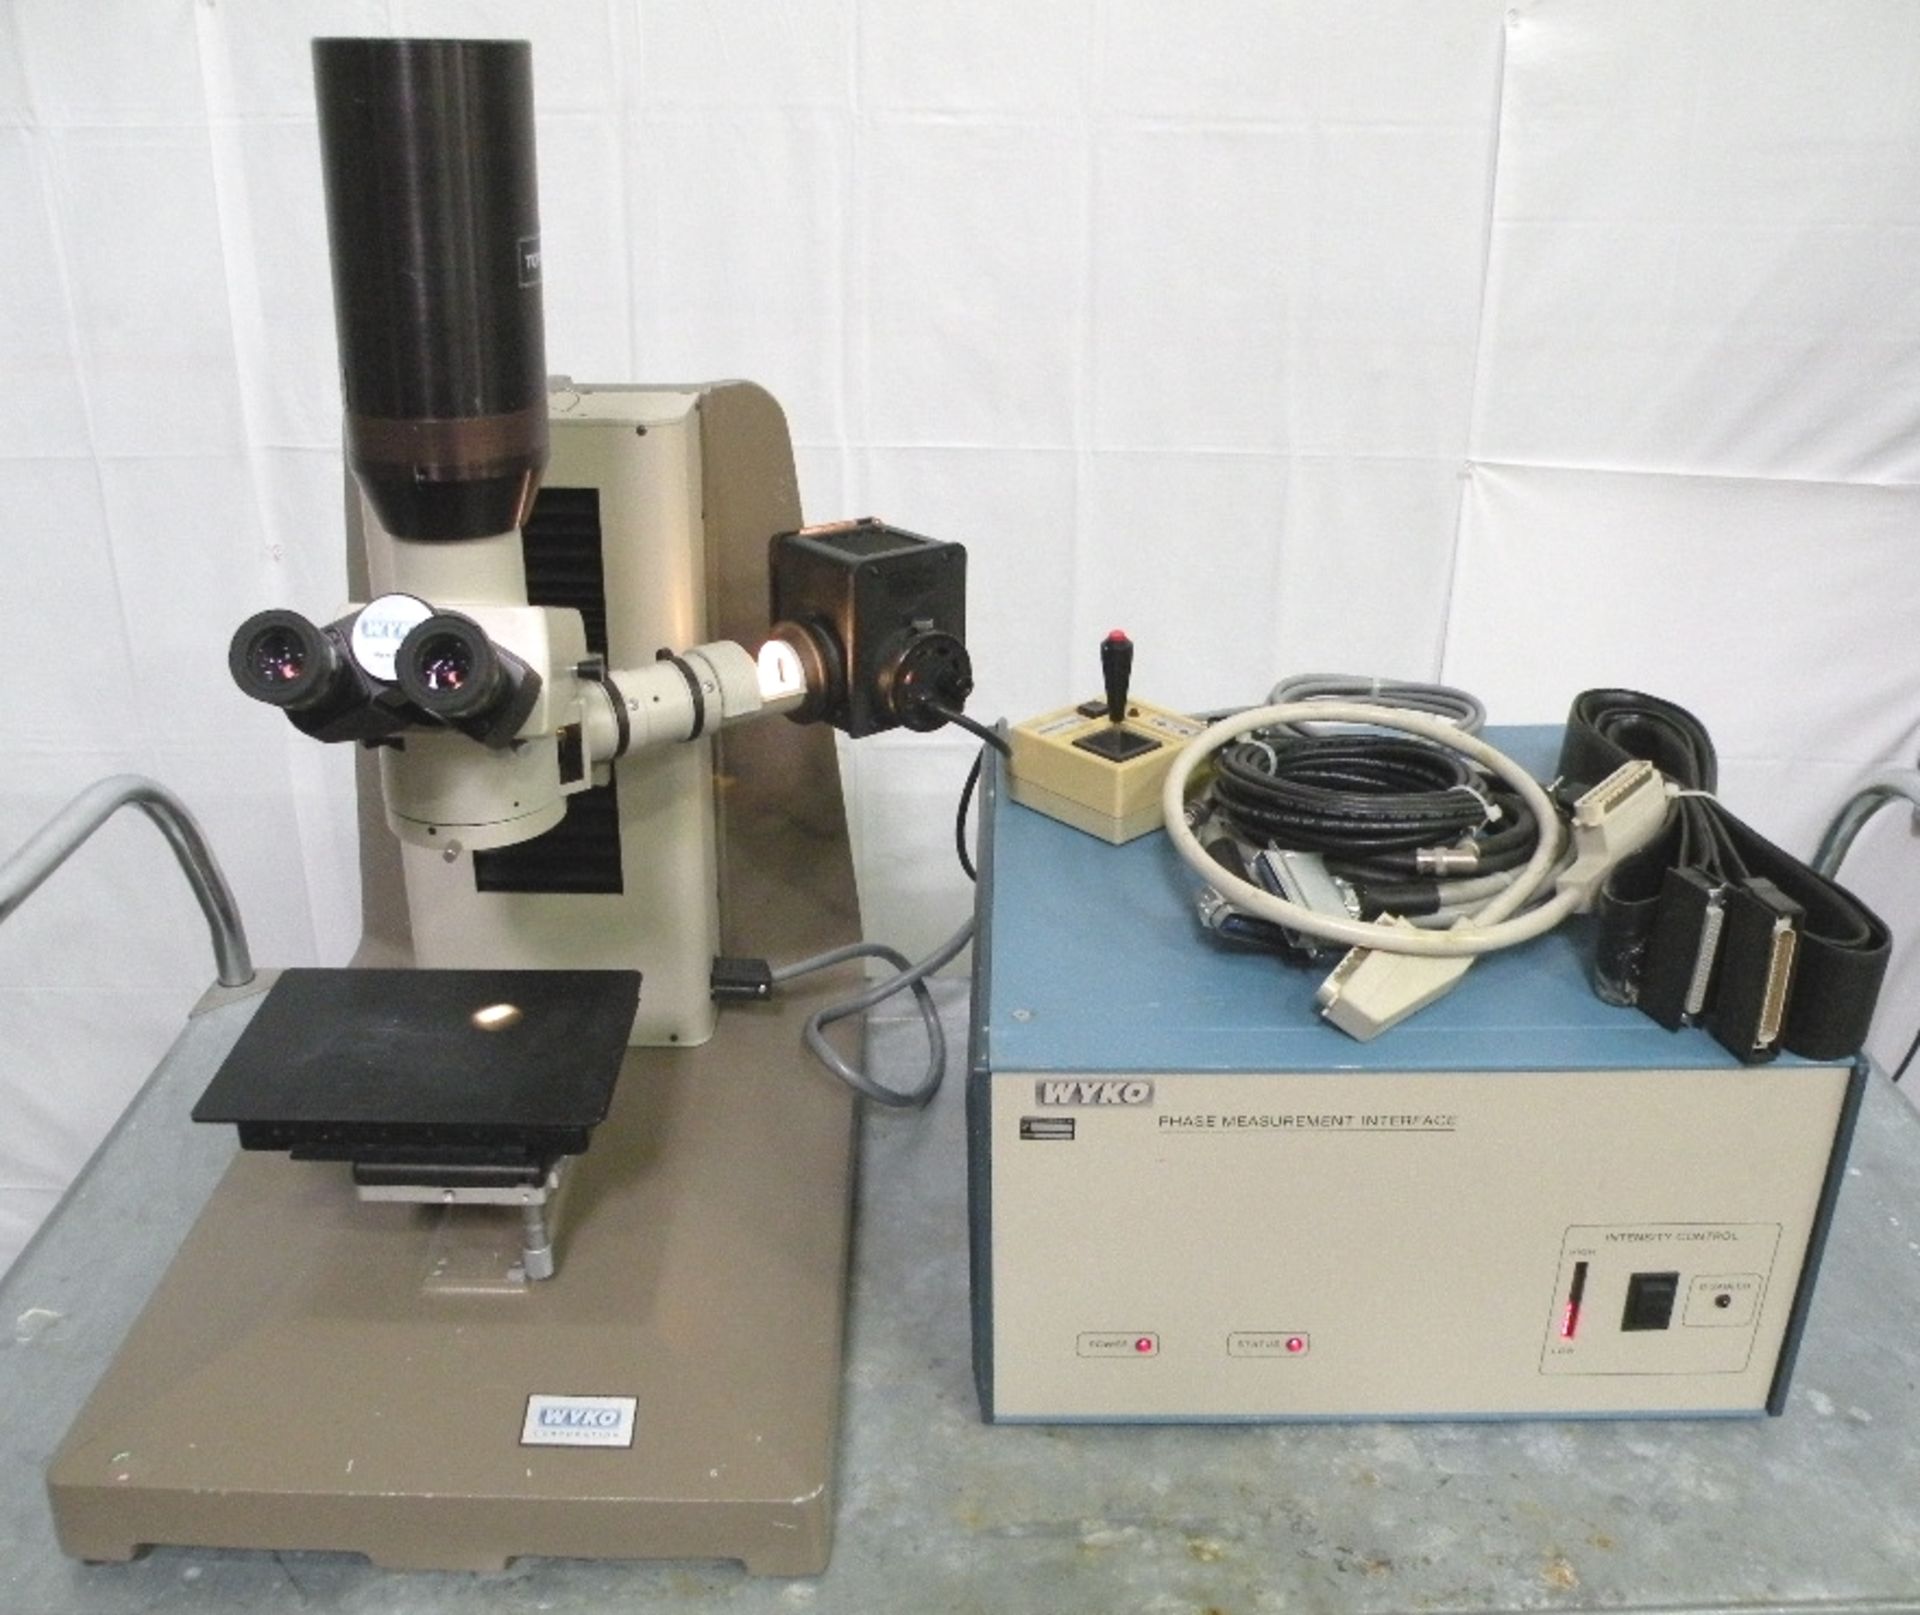 Wyko Microscope w/ Motorized Base, Phase Measurement Unit, TOPO-3D Camera